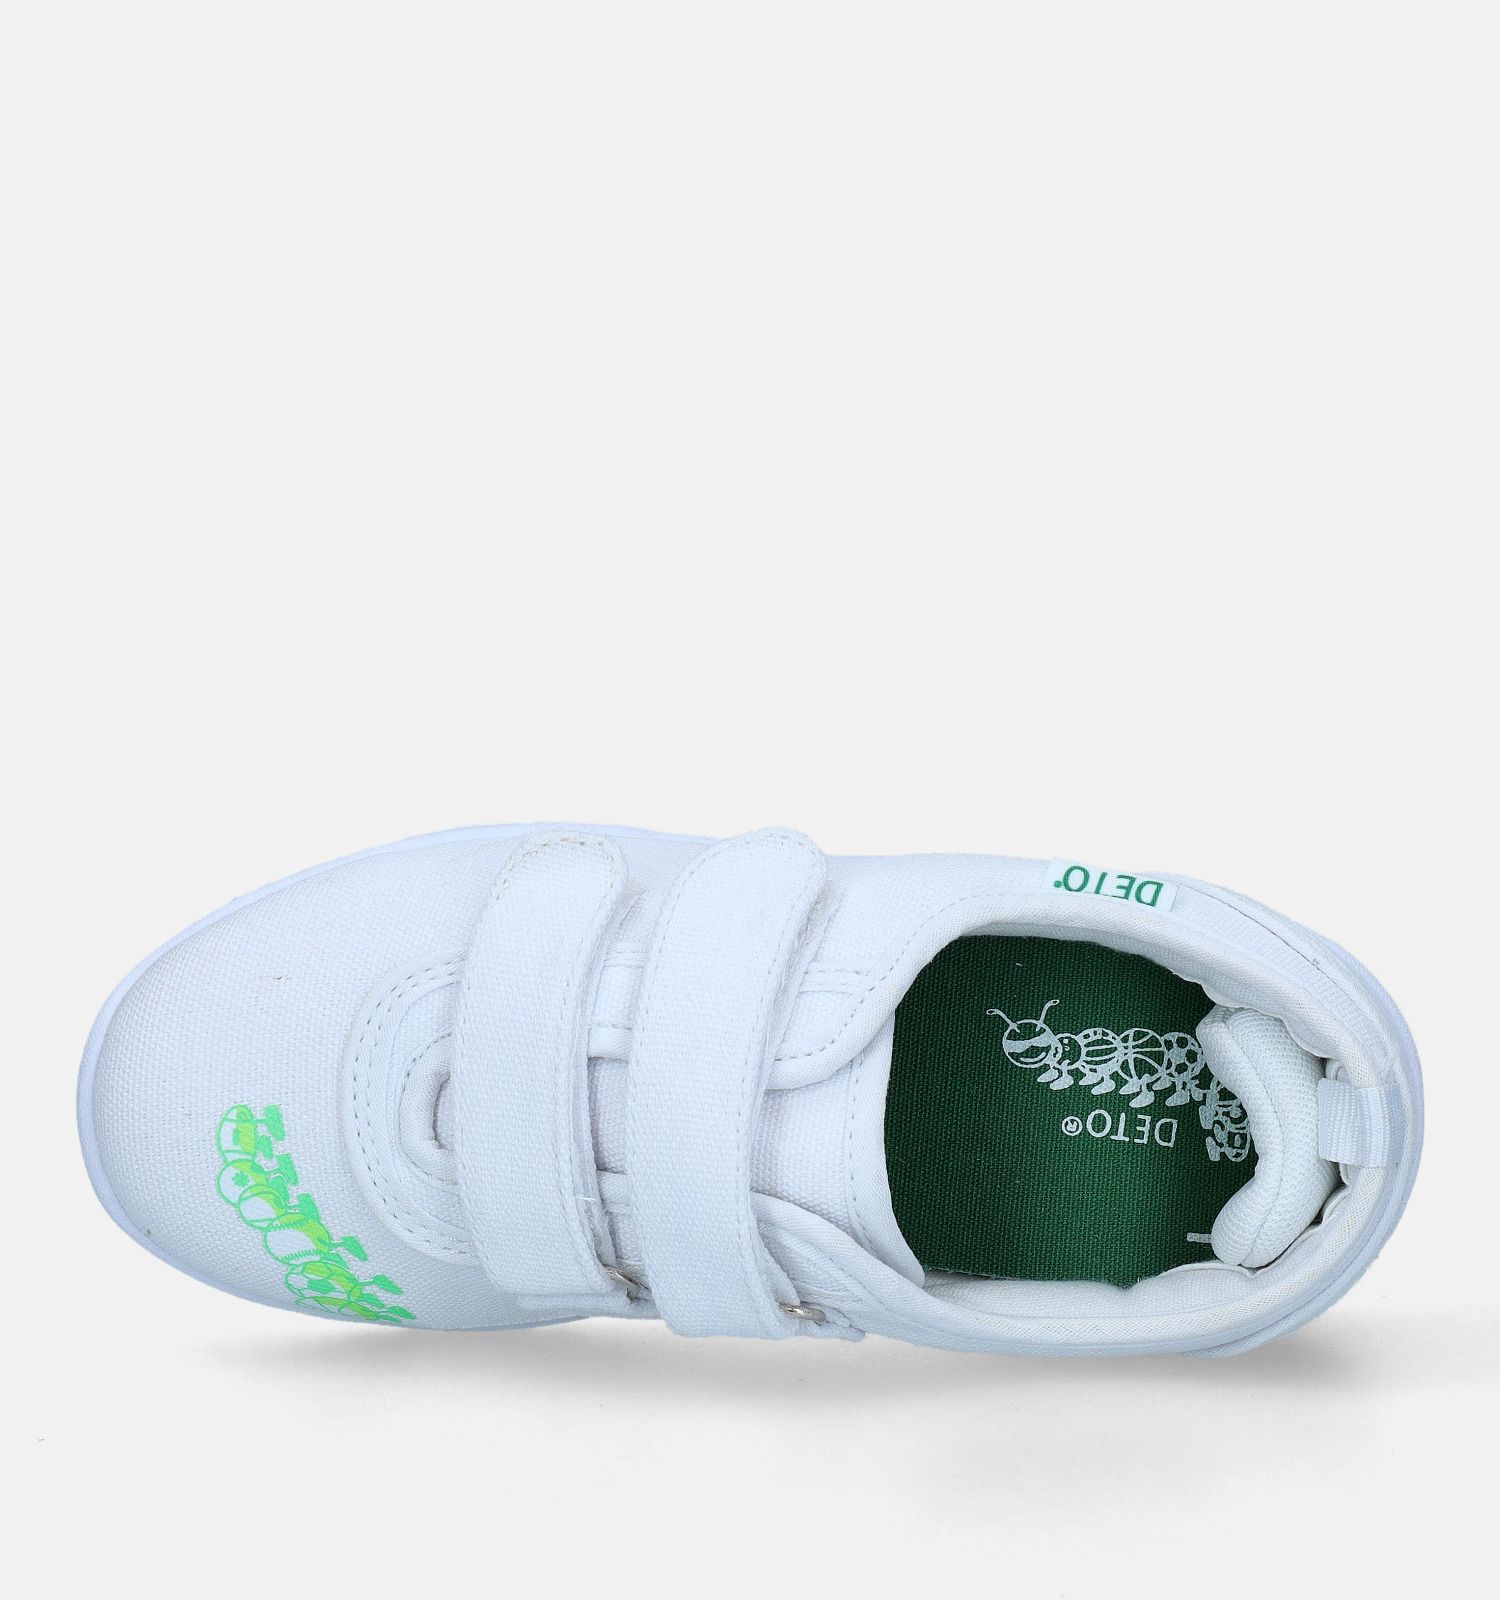 Raadplegen dorst semester Deto Witte Turnpantoffels met Velcro | Meisjes,Jongens Sportschoenen